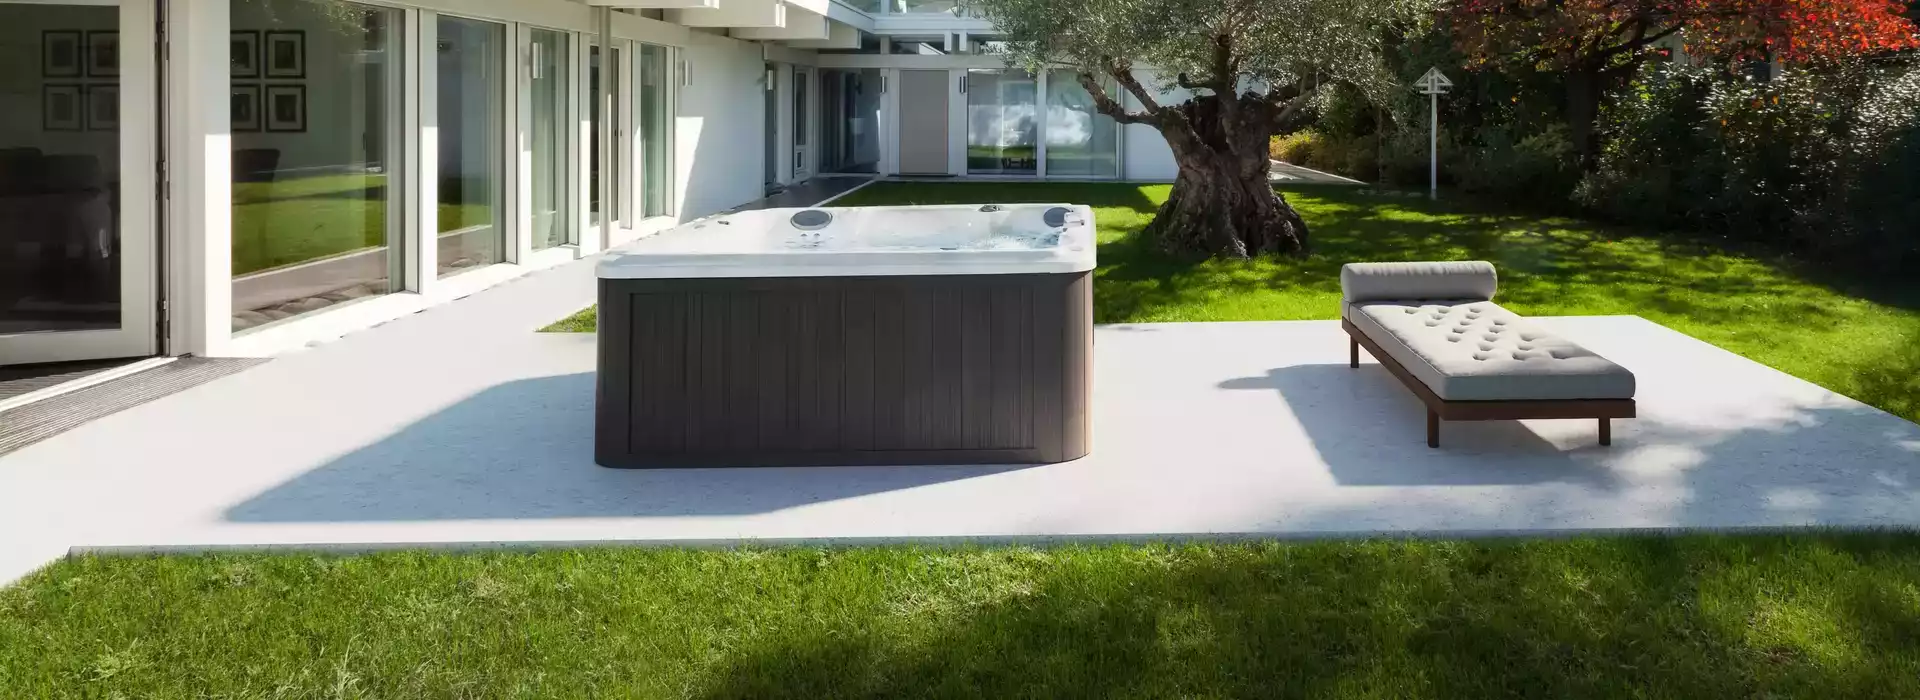 jacuzzi® hot tub installation inspiration